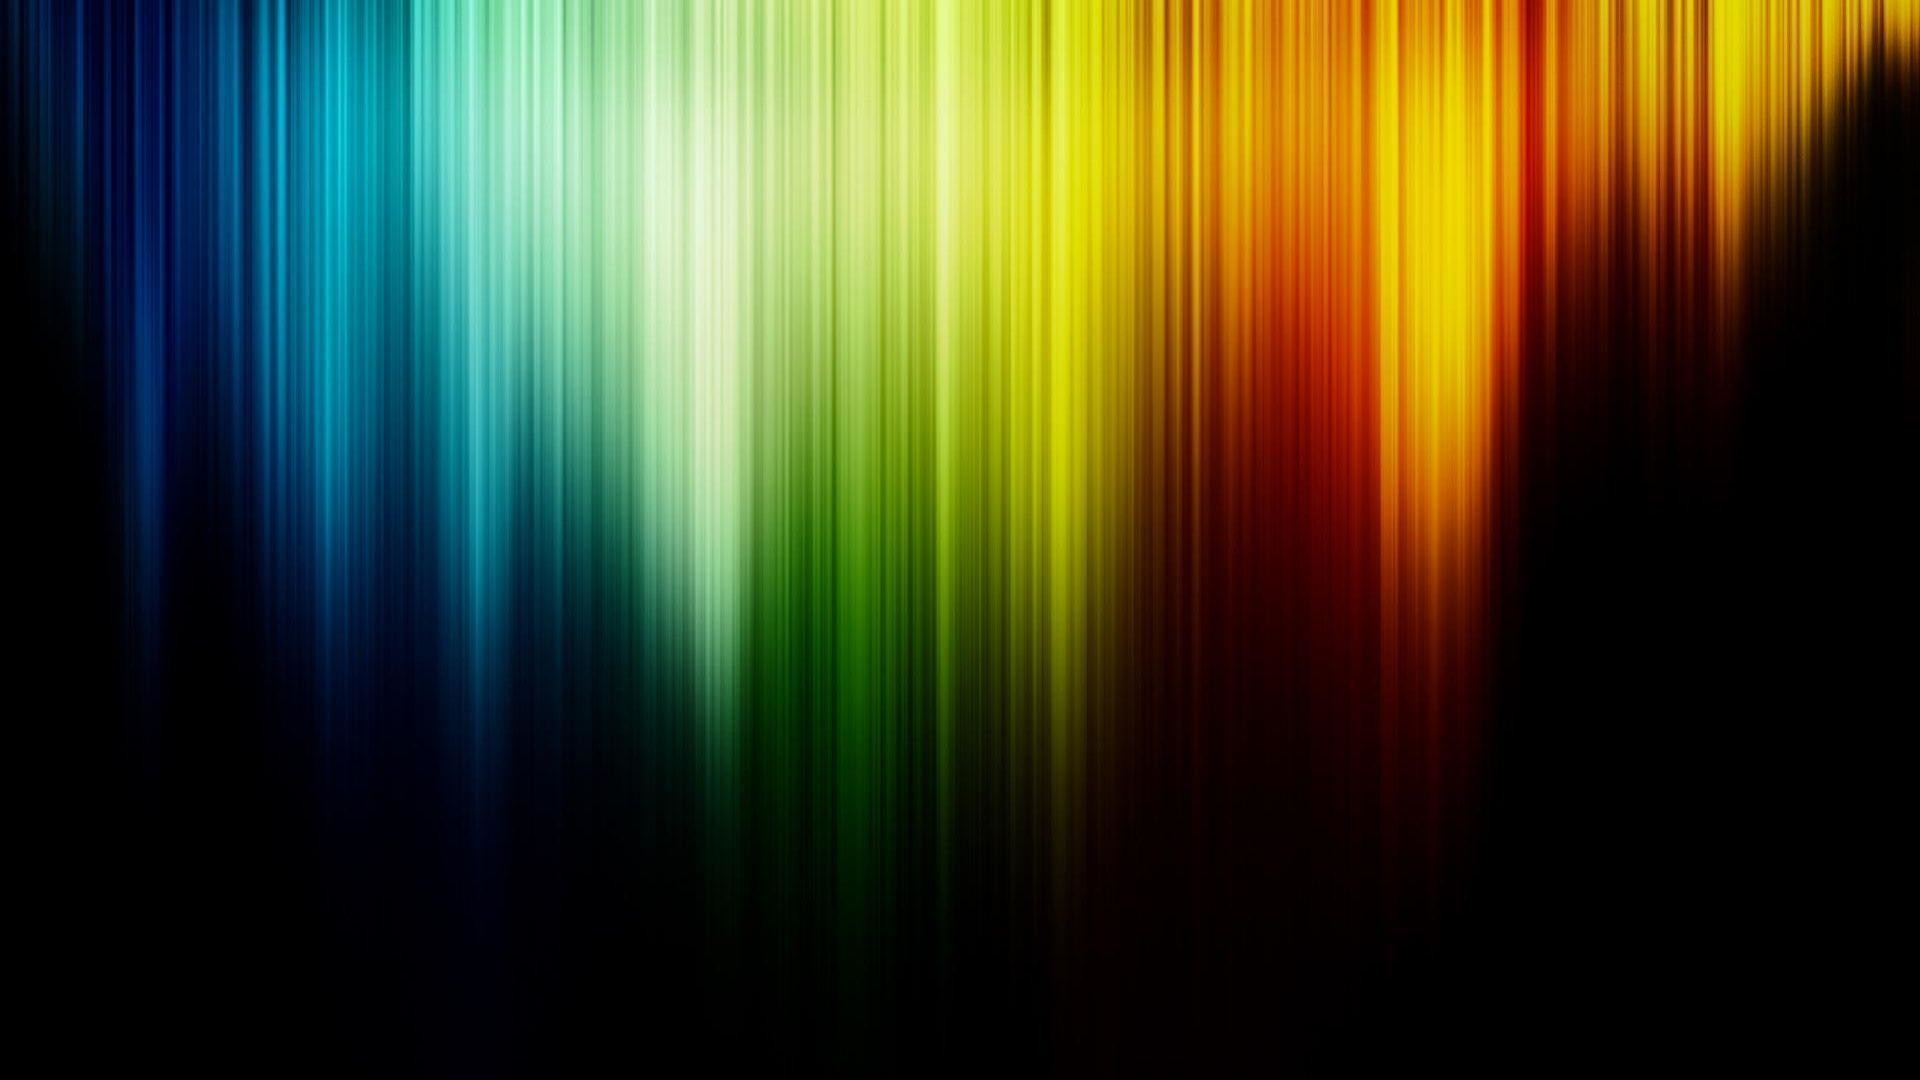 1920x1080 Bright color background wallpaper jpg 187475